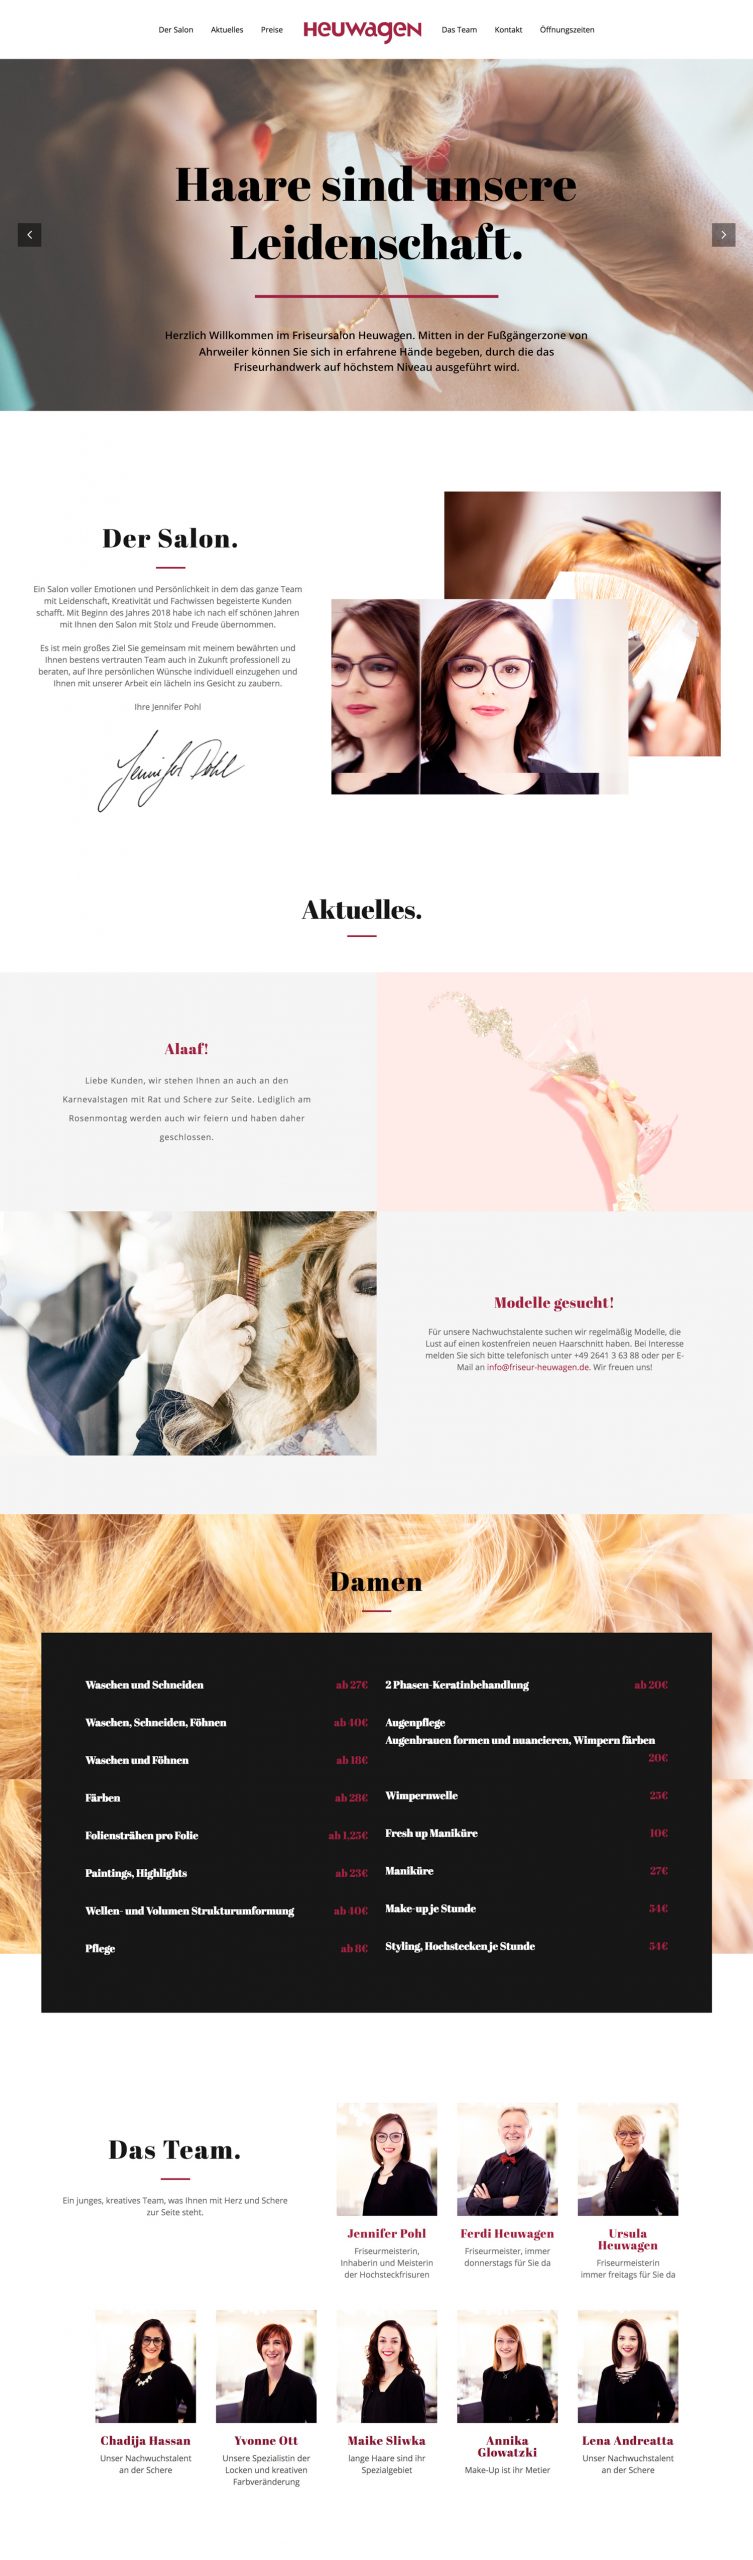 Screen design and website